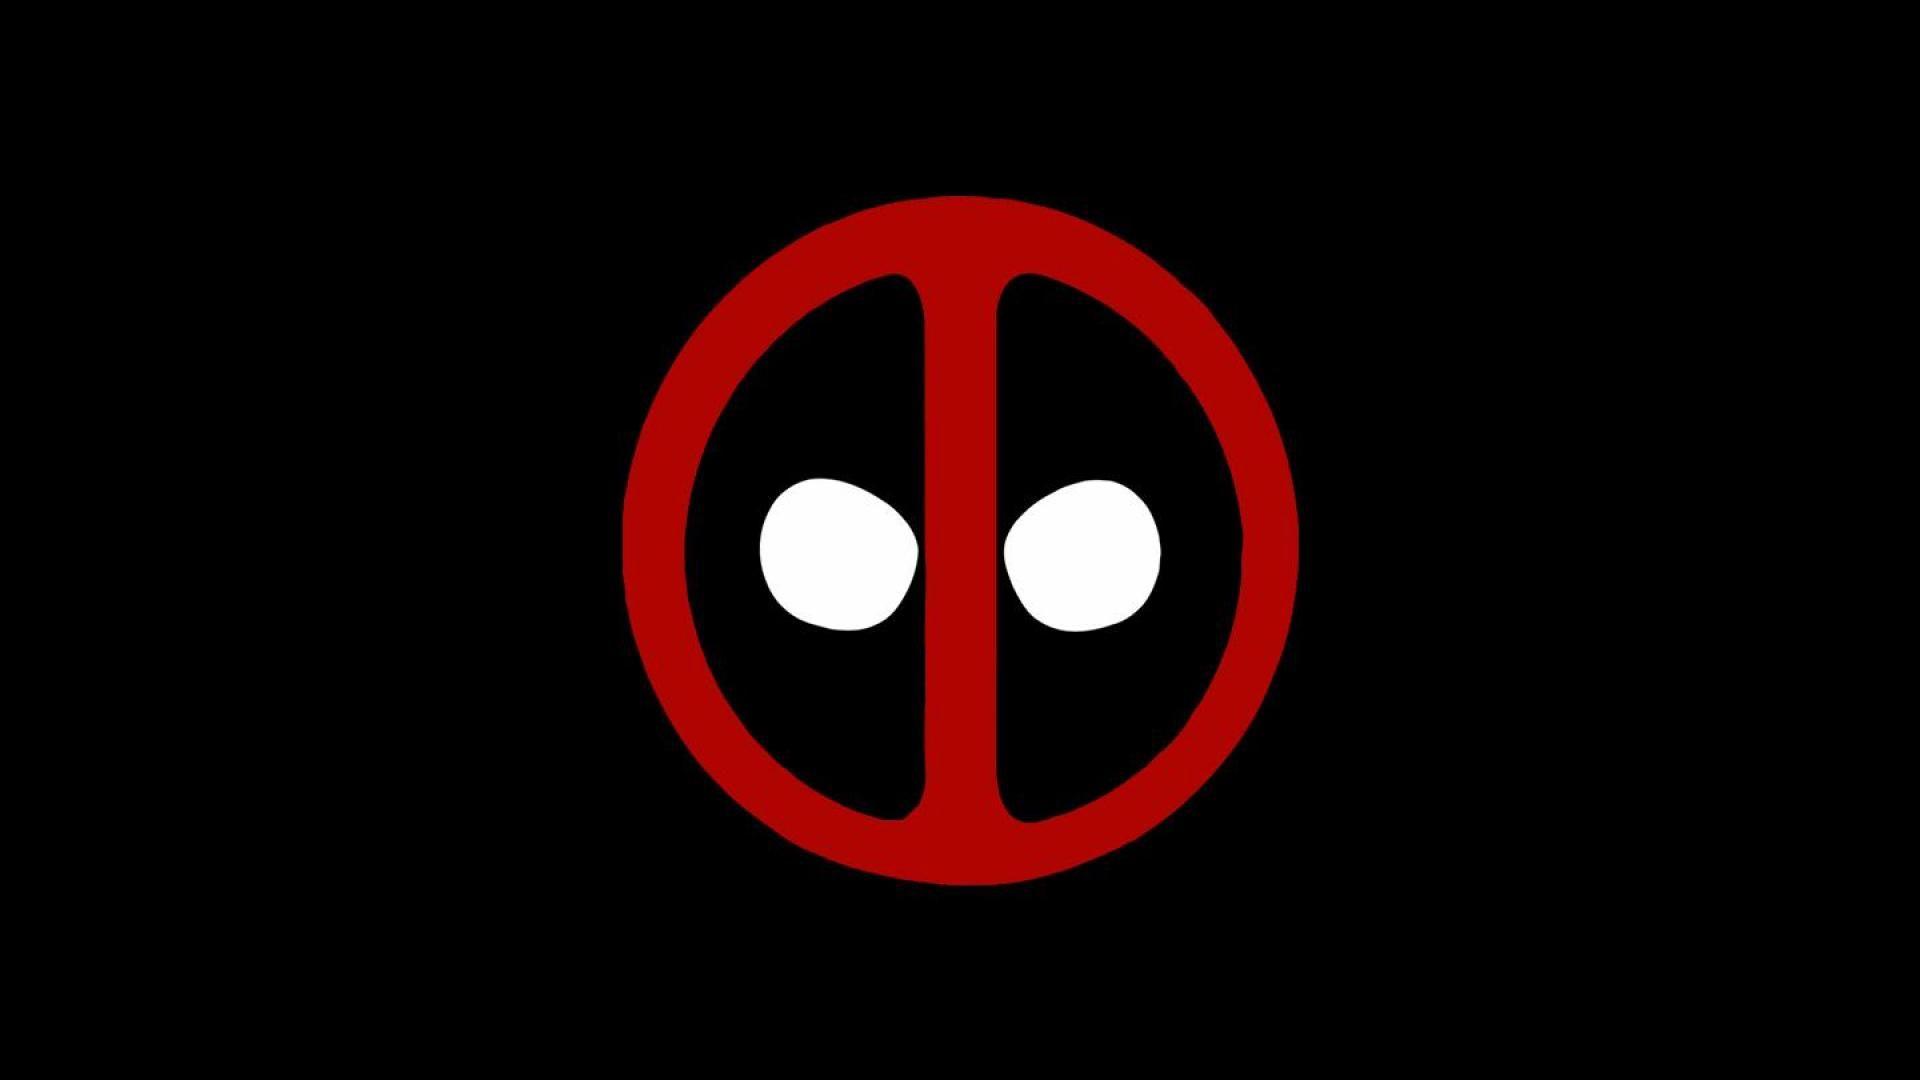 Deadpool Cartoon Logo wallpaper 2018 in Deadpool